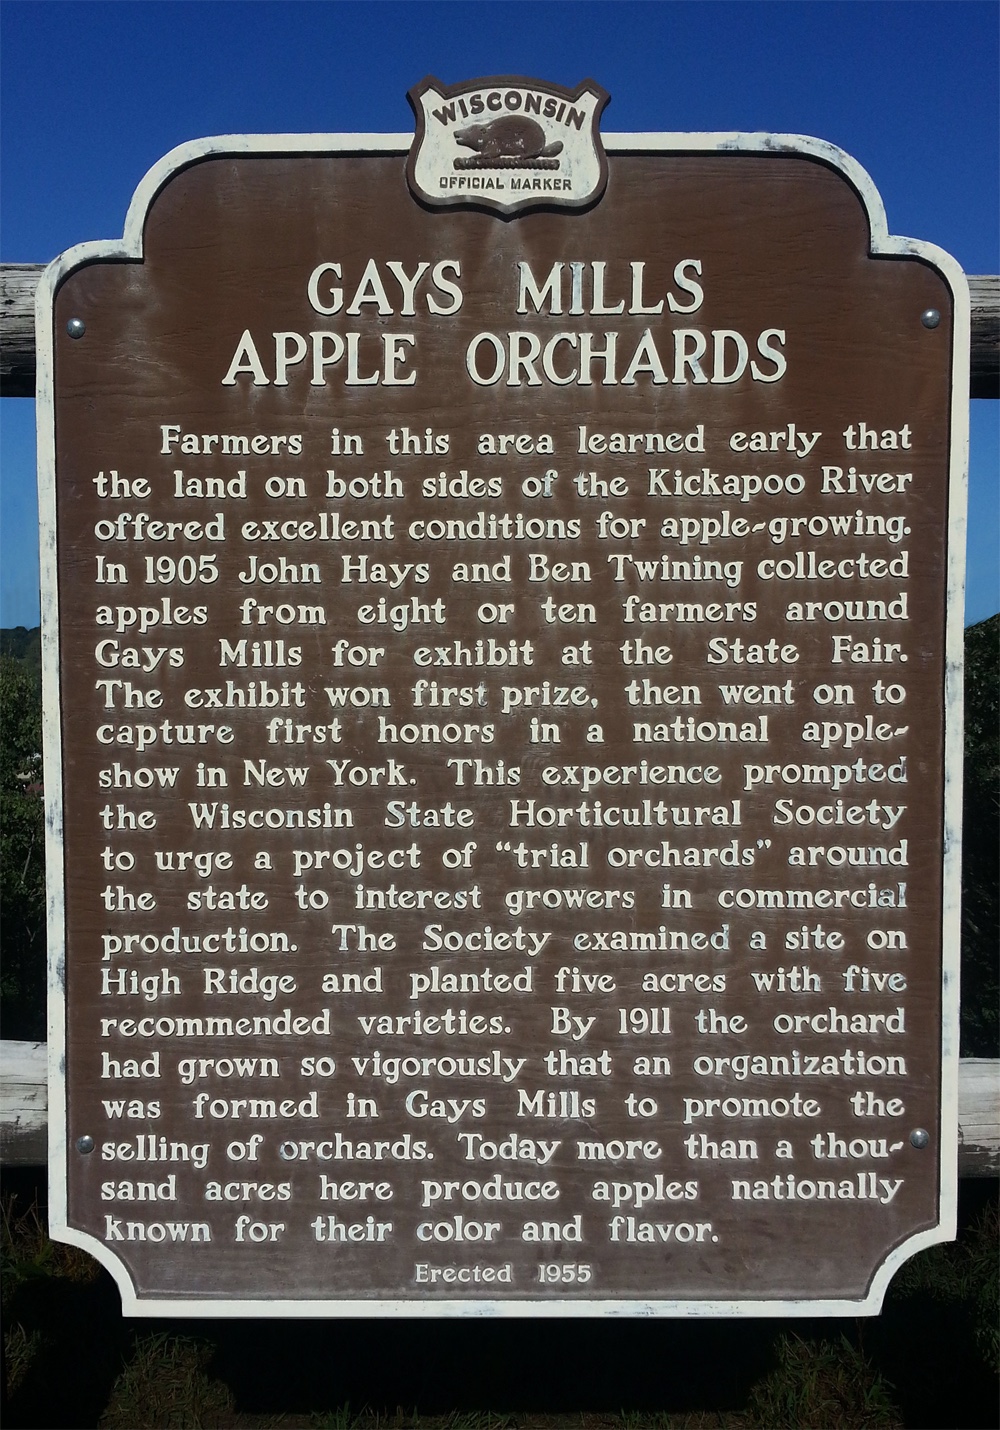 Gays Mills Apple Orchard Marker.